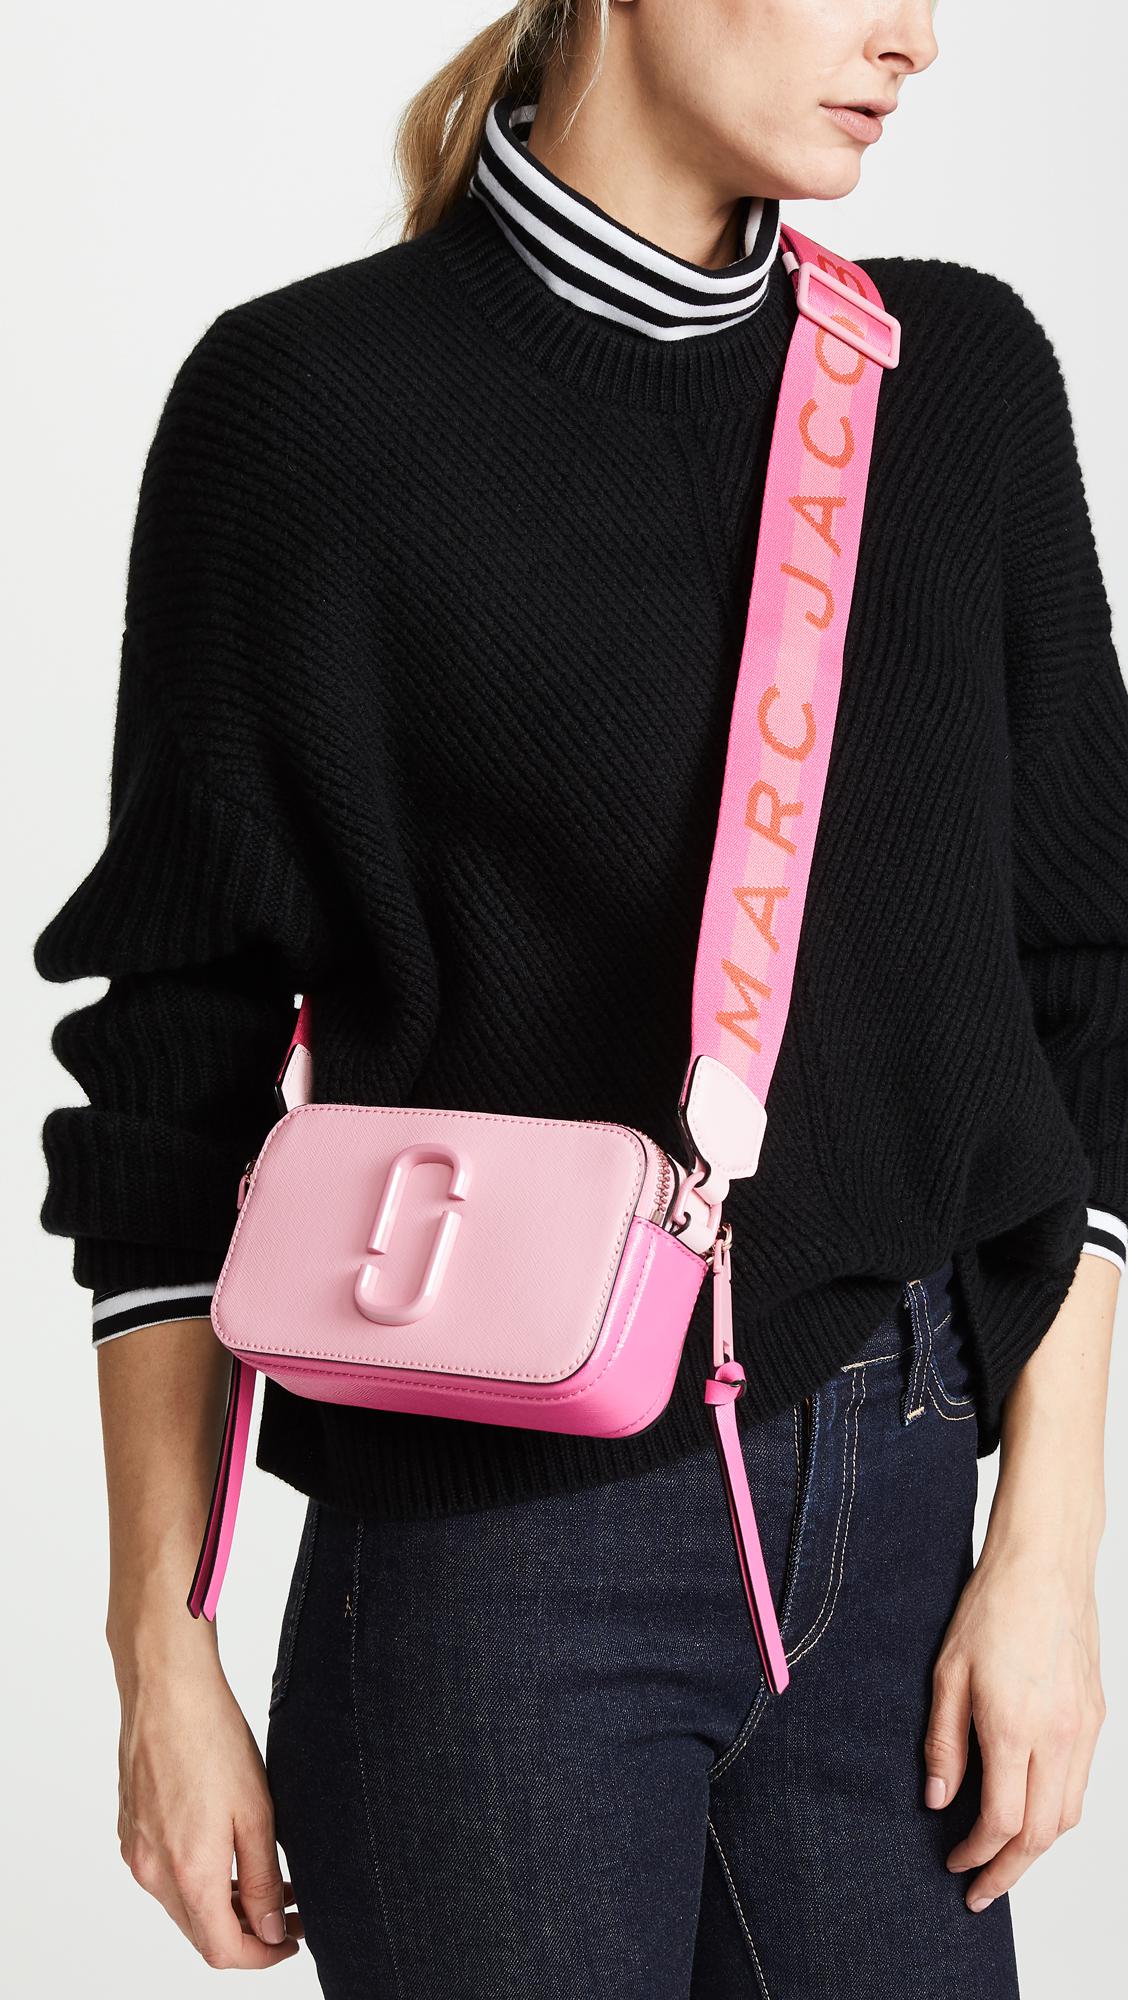 Marc Jacobs Crossbody Snapshot Shoulder Bag gray pink Free Shipping